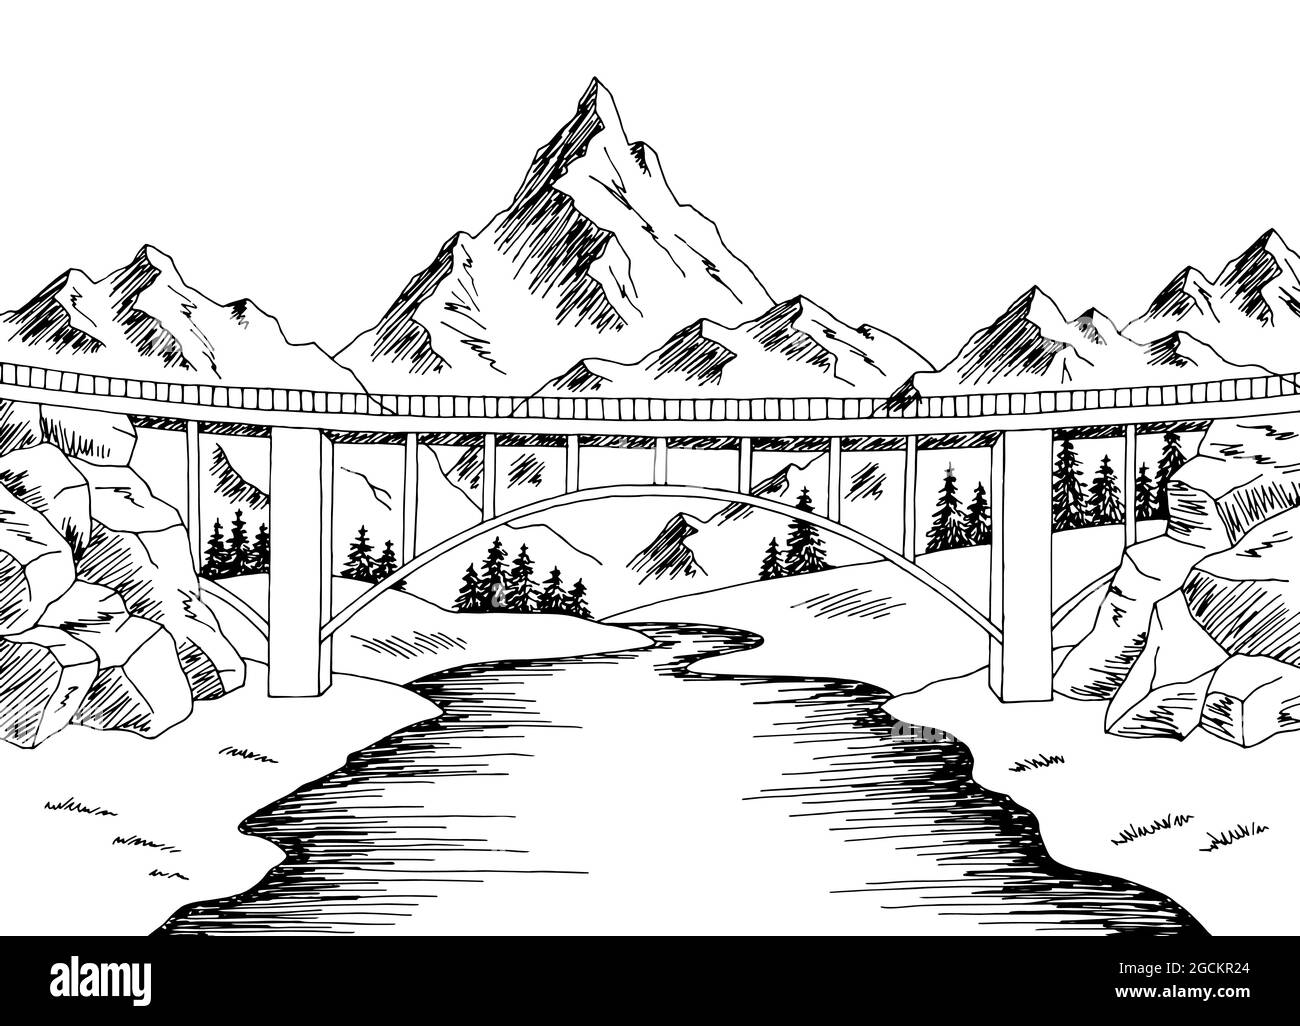 File:Bridge drawing.svg - Wikipedia